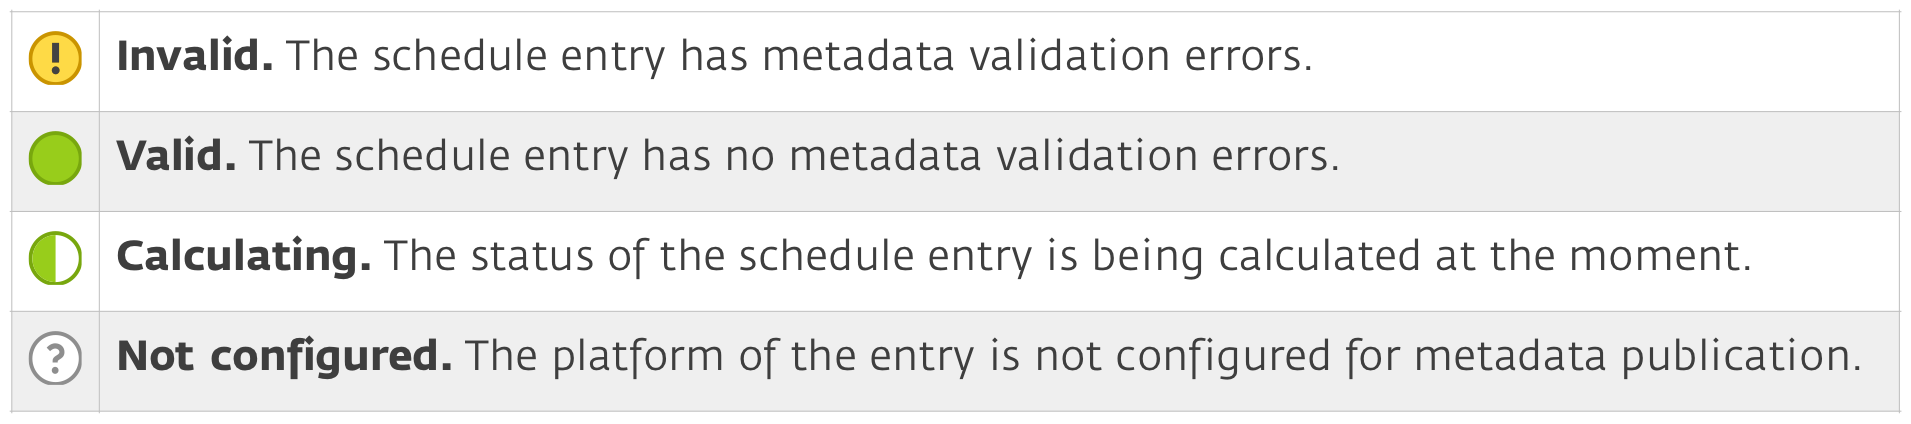 Publication and metadata statuses 2